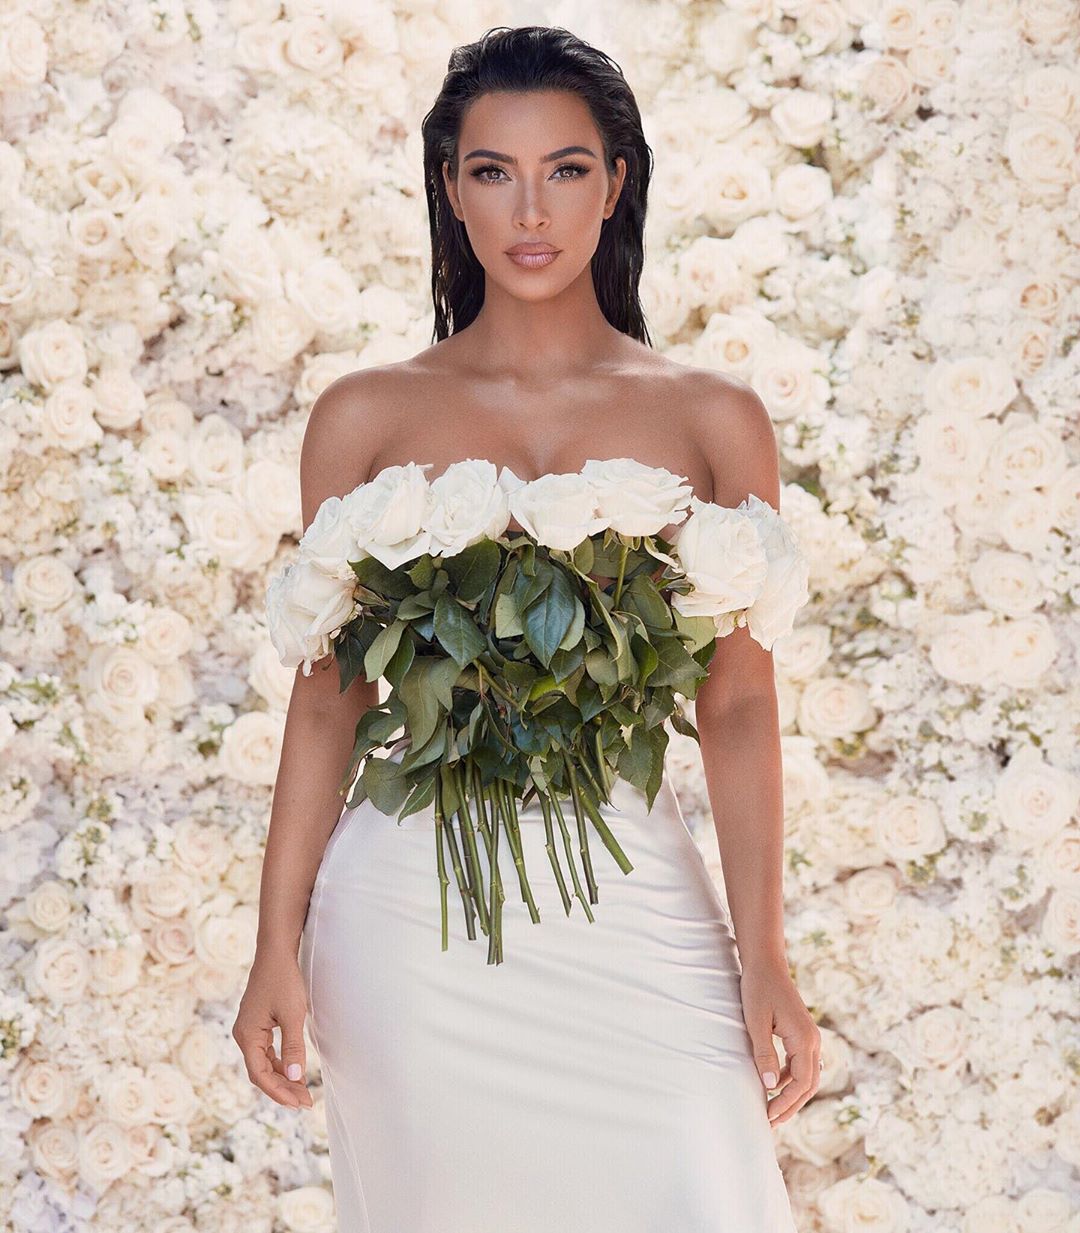 Kim Kardashian Sizzling Hot In White